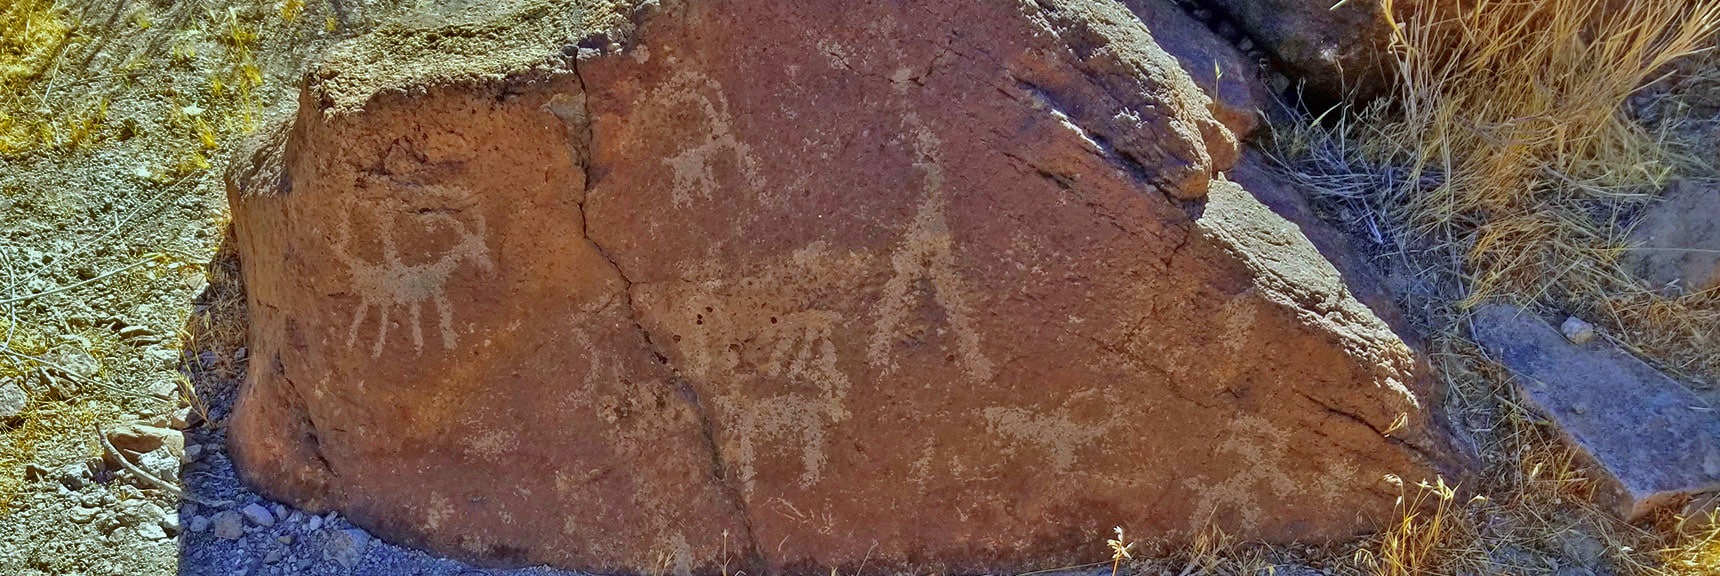 Petroglyph Canyon | Sloan Canyon National Conservation, Nevada